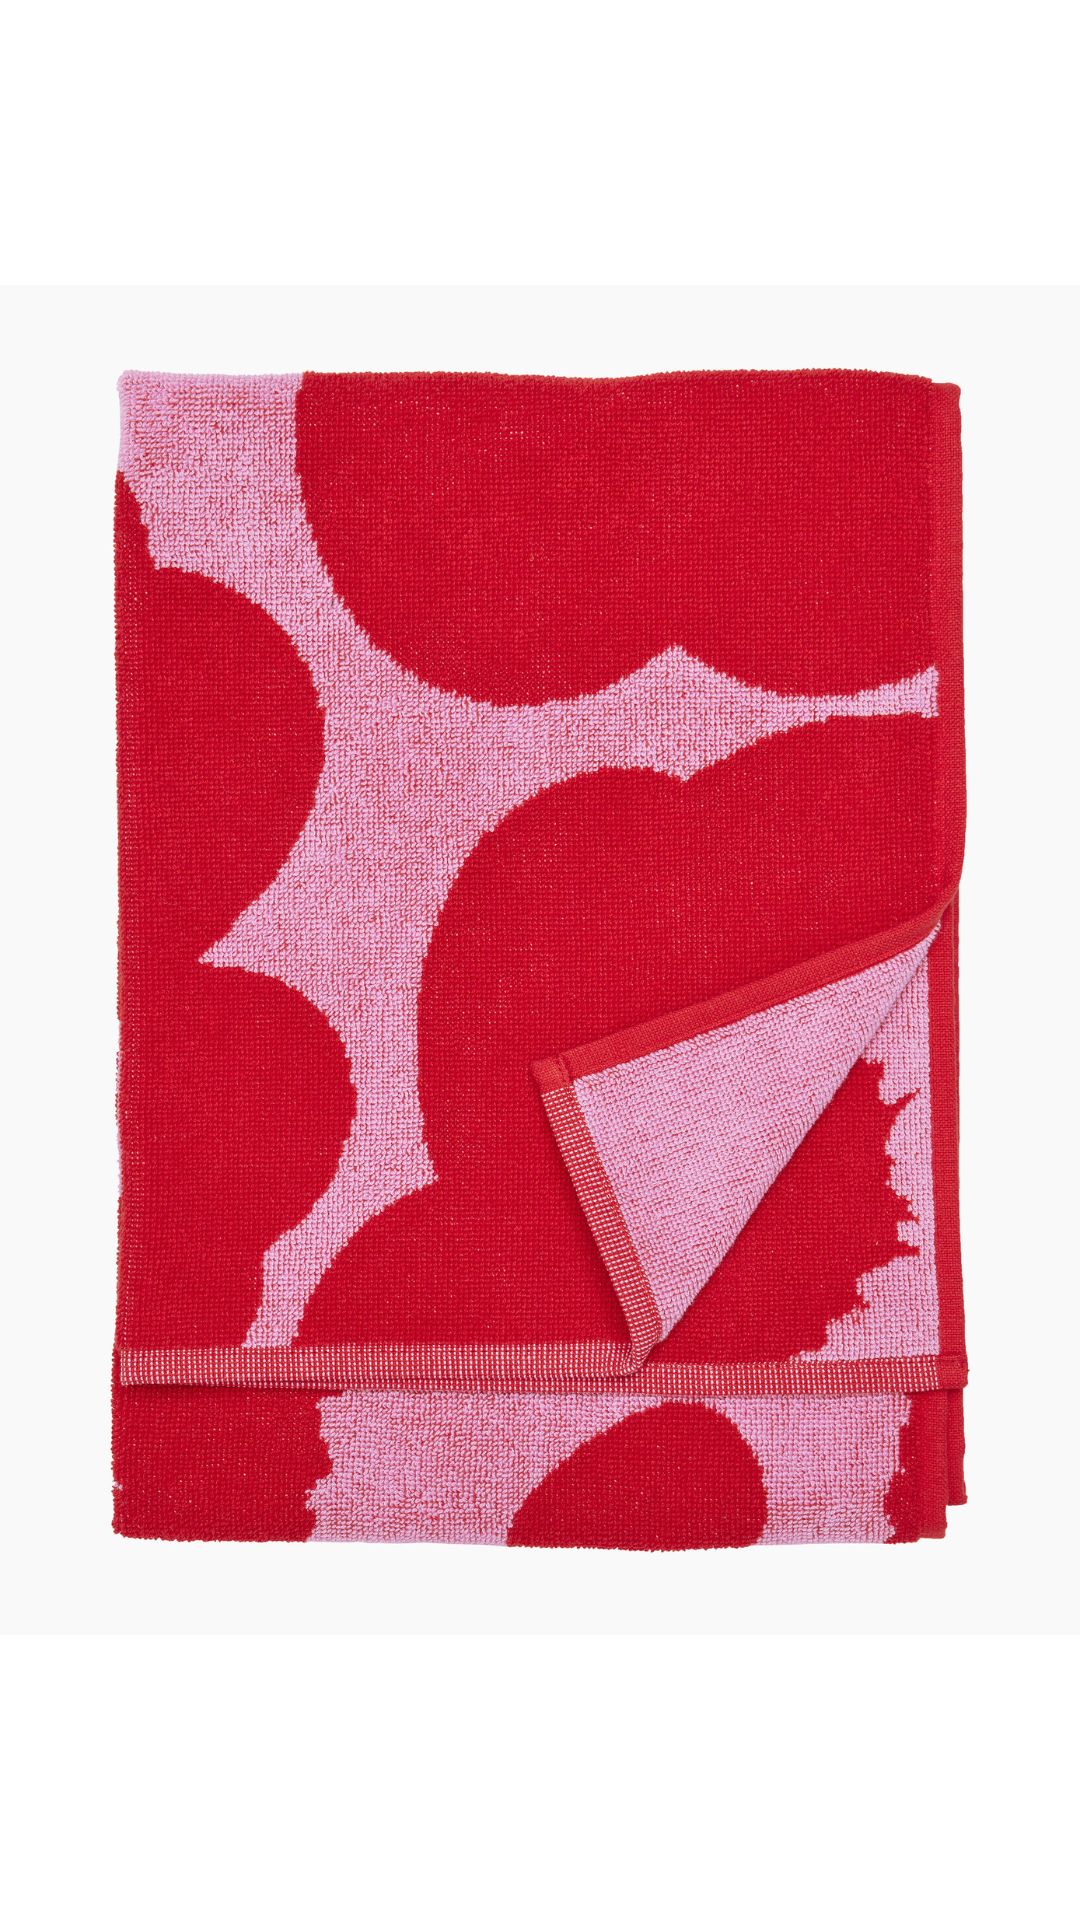 Marimekko Unikko Handtuch 150x70cm rot pink